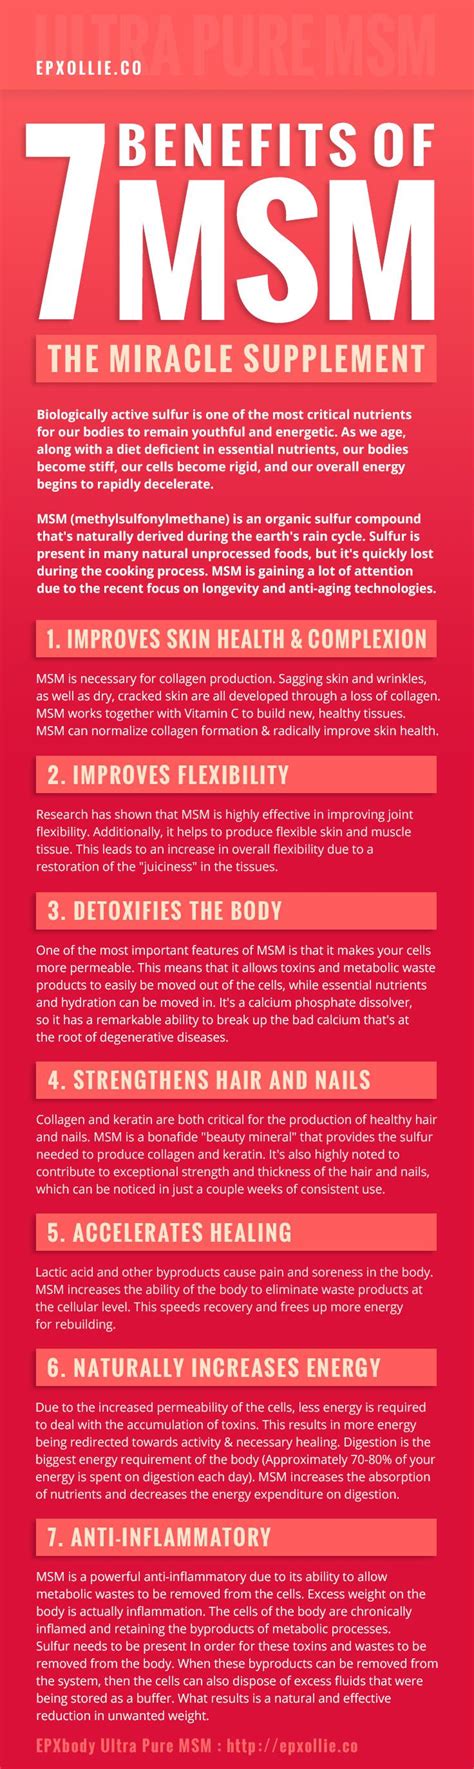 MSM Supplement Benefits - MSM improves joints, skin health, allergies ...